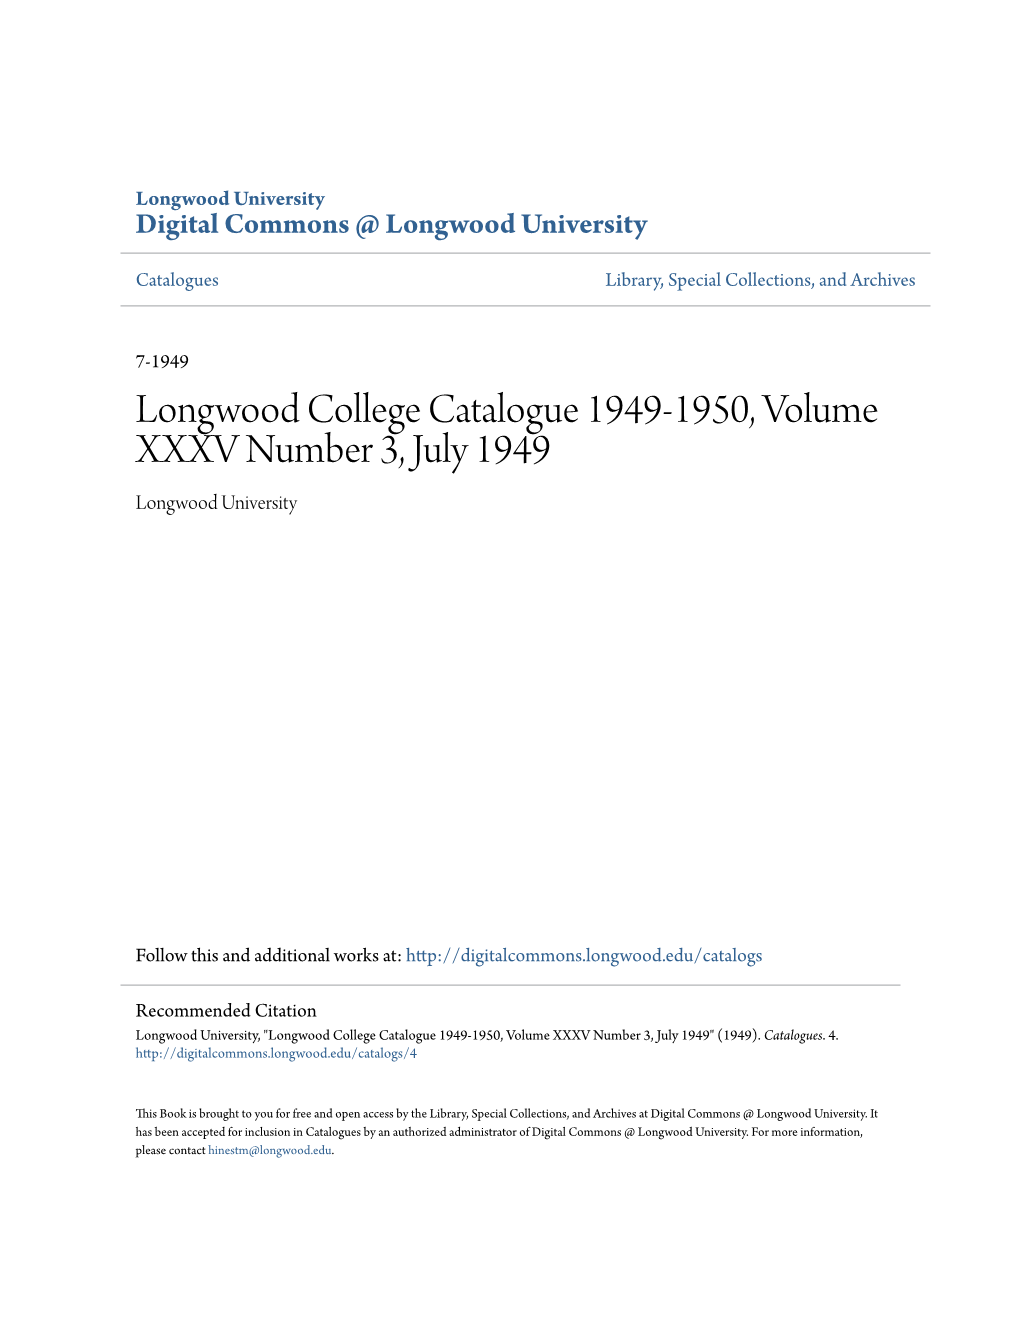 Longwood College Catalogue 1949-1950, Volume XXXV Number 3, July 1949 Longwood University